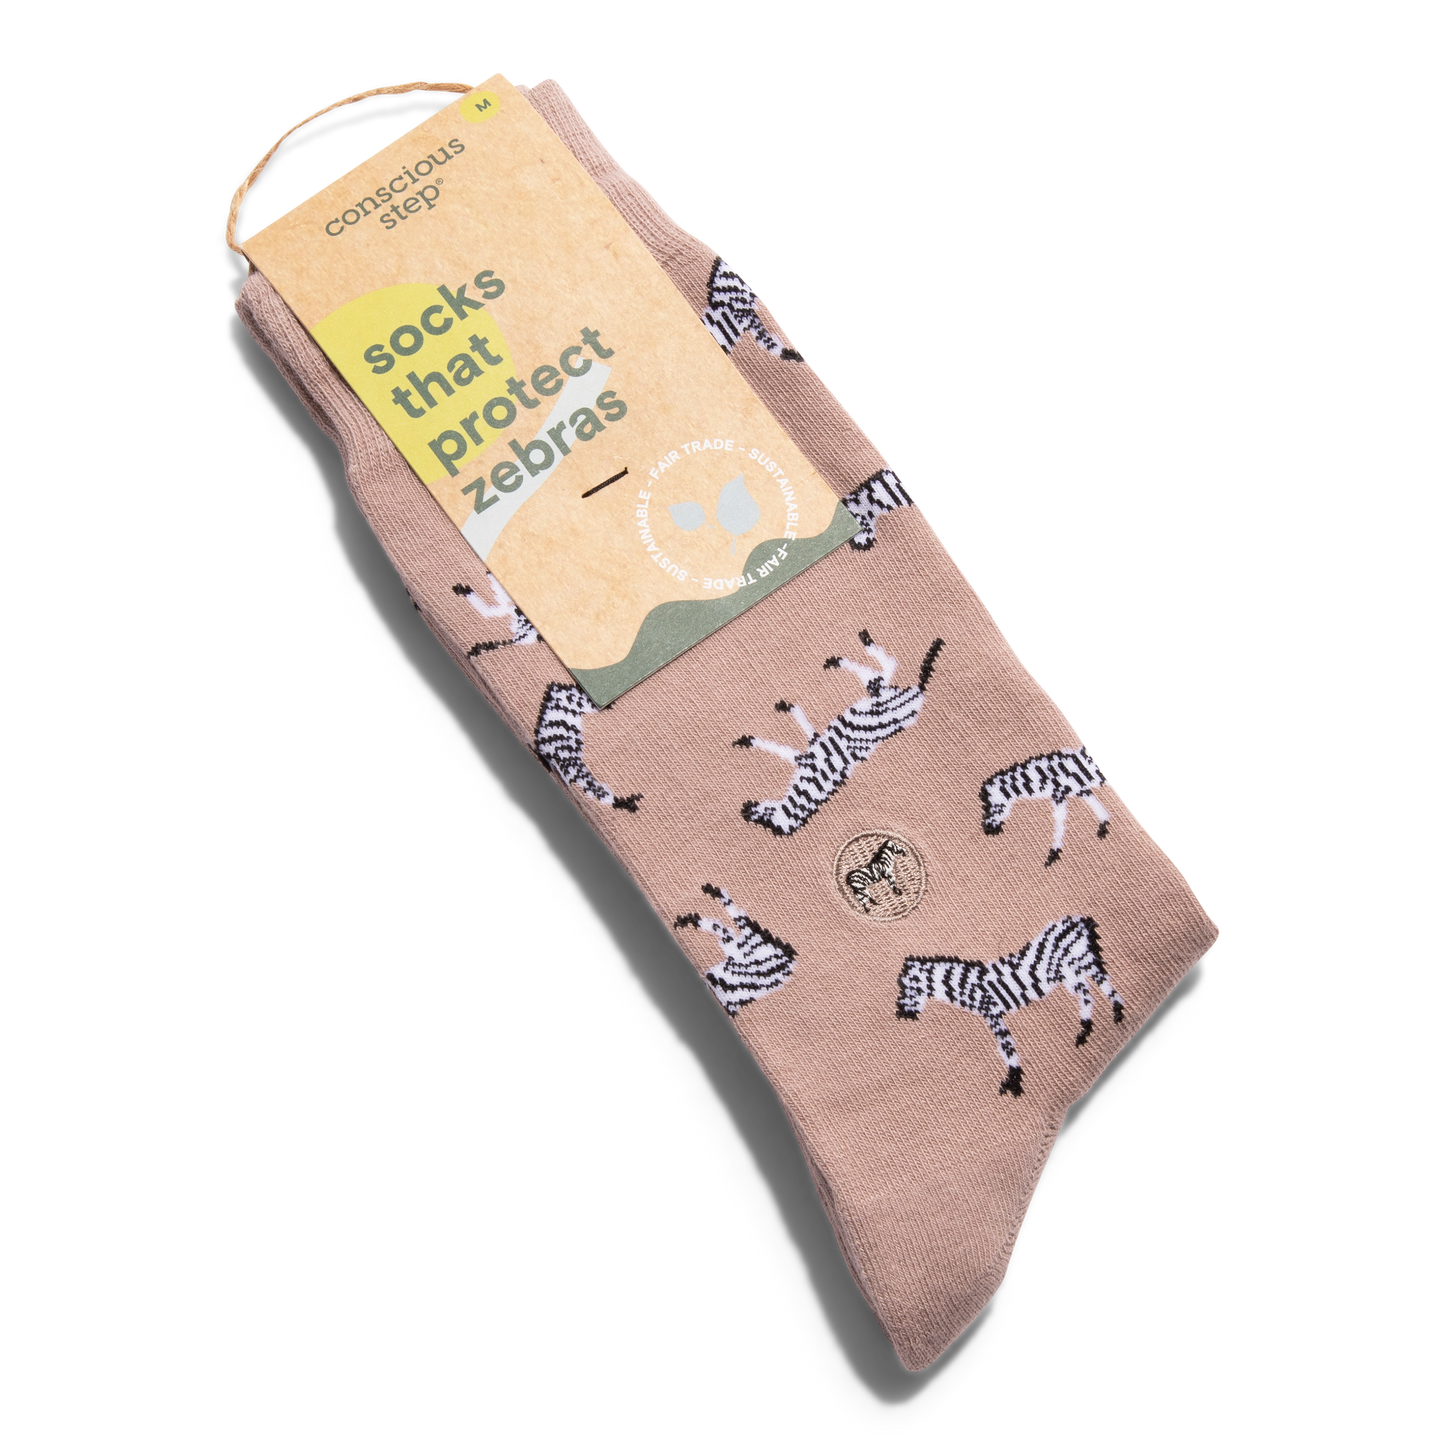 Socks that Protect Zebras: Medium